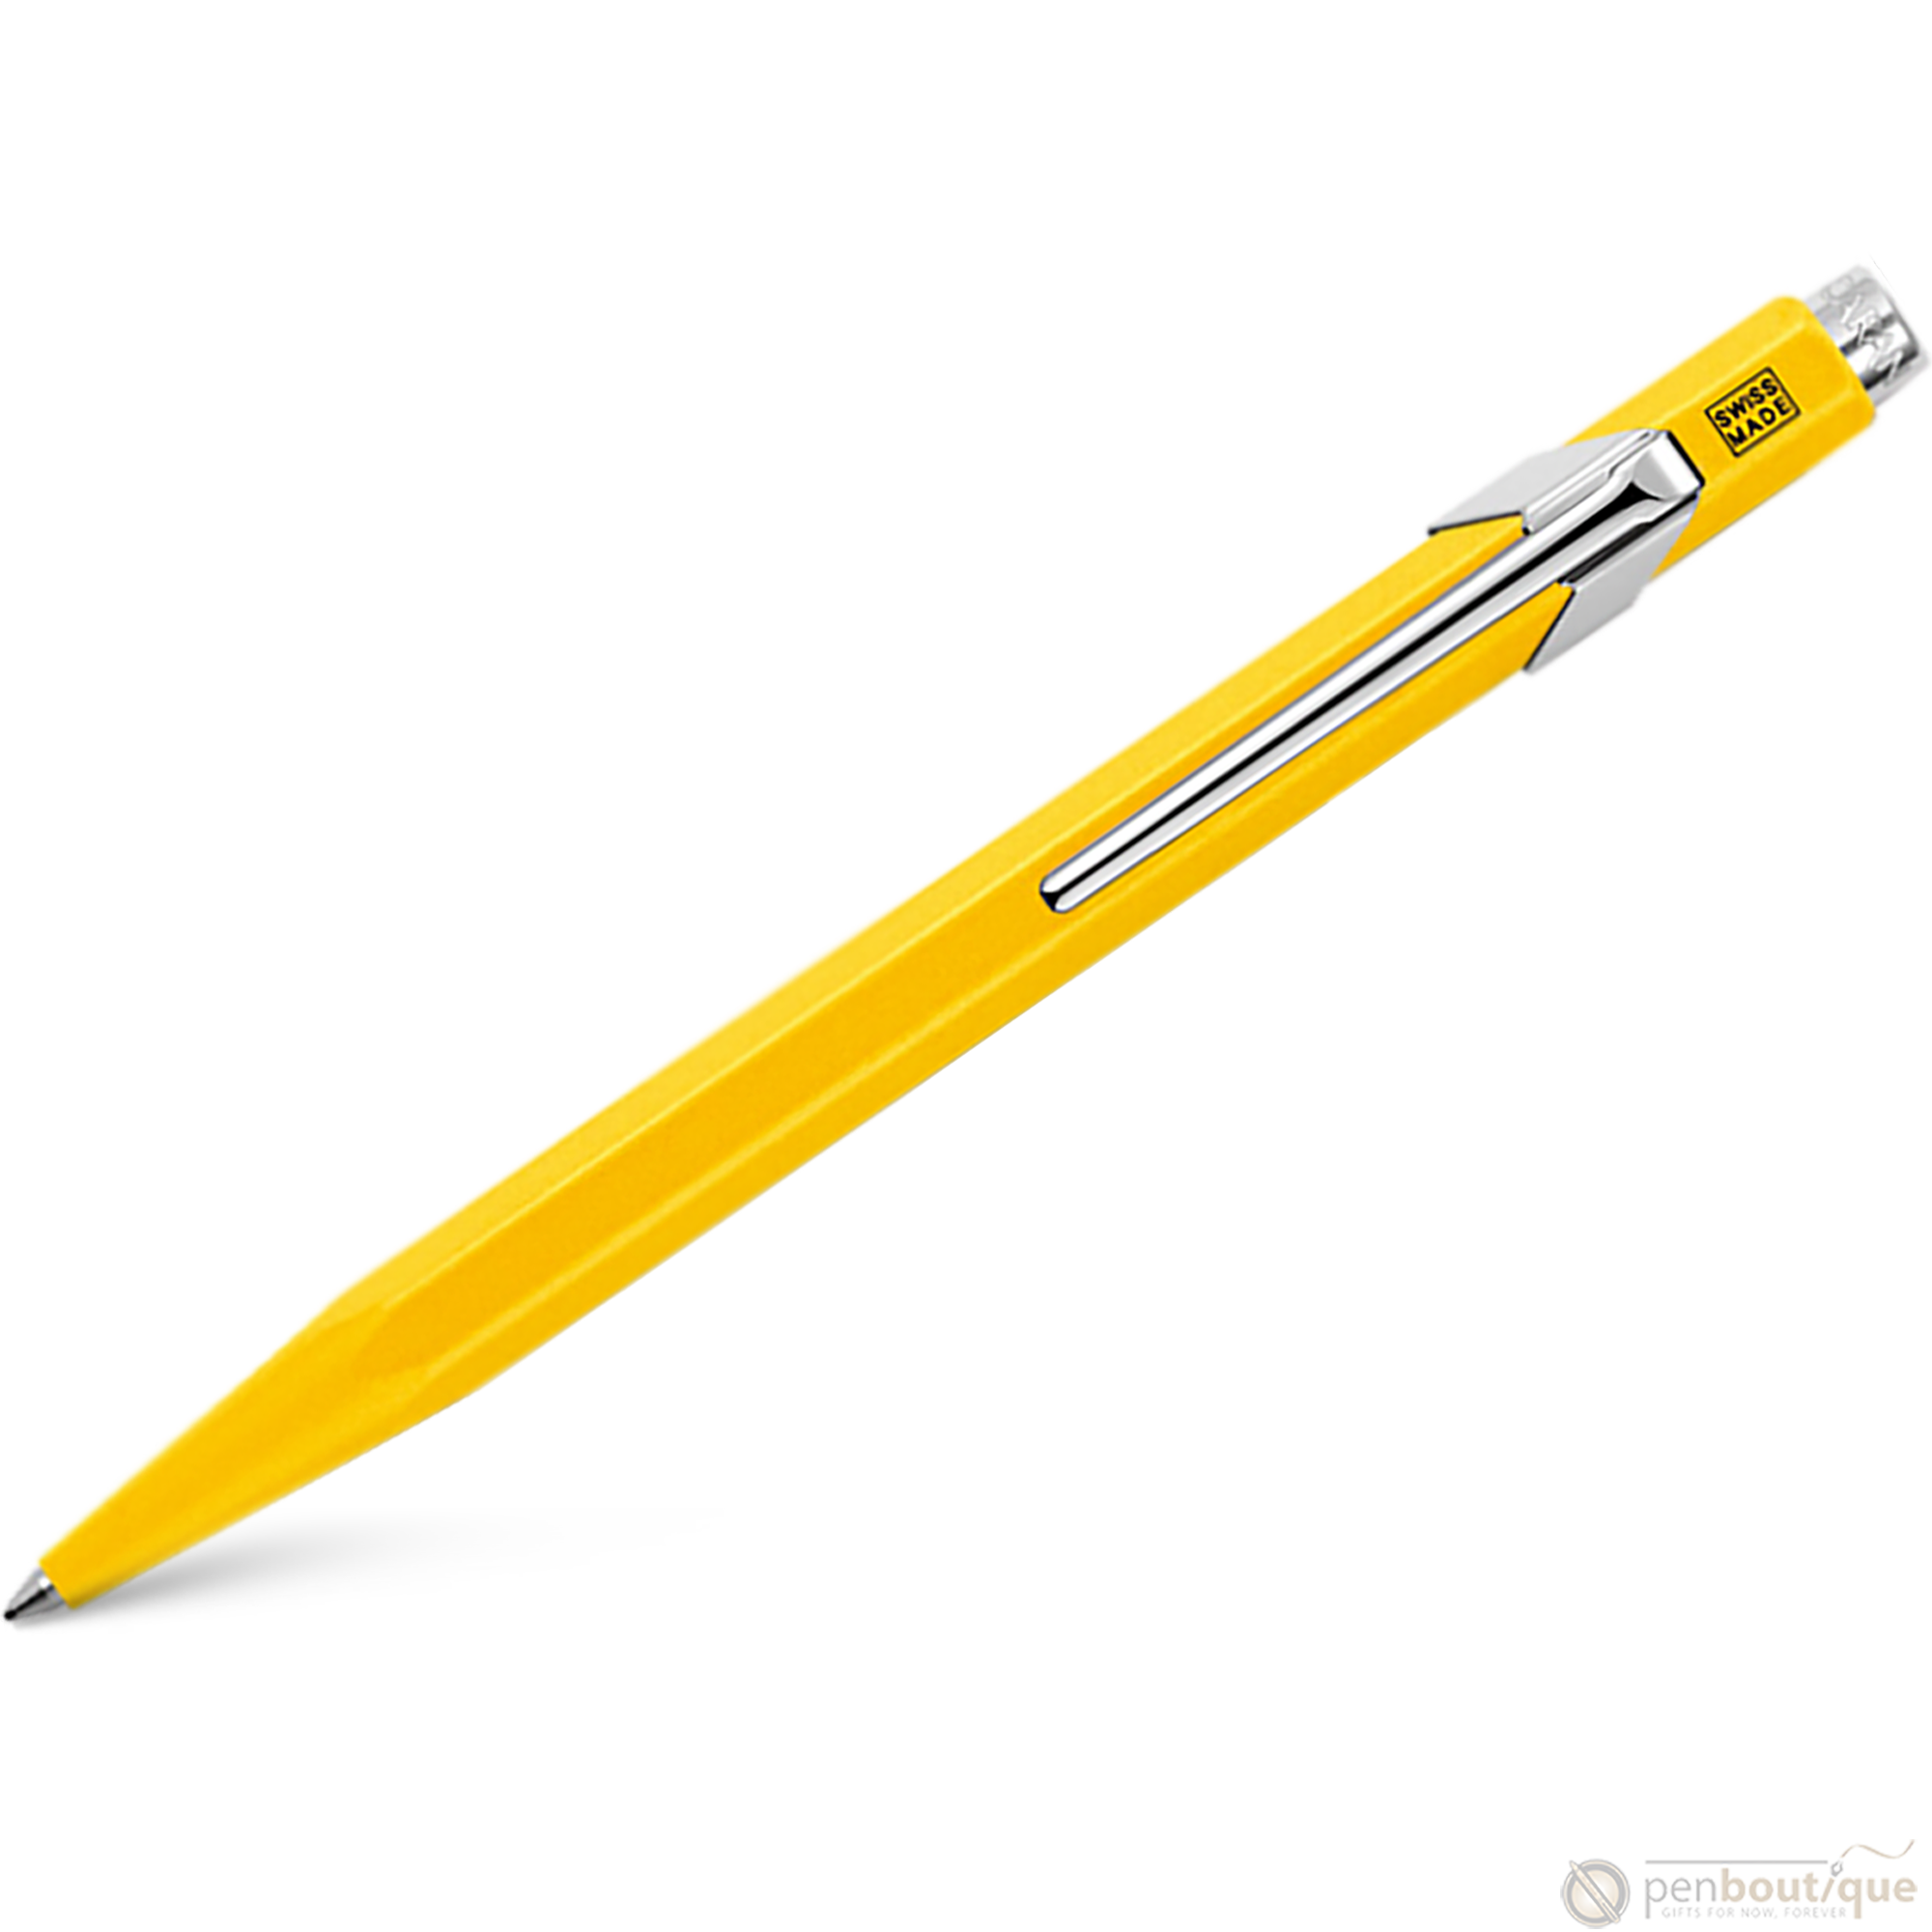 Caran d'Ache 849 Ballpoint Pen - Classic Yellow-Pen Boutique Ltd